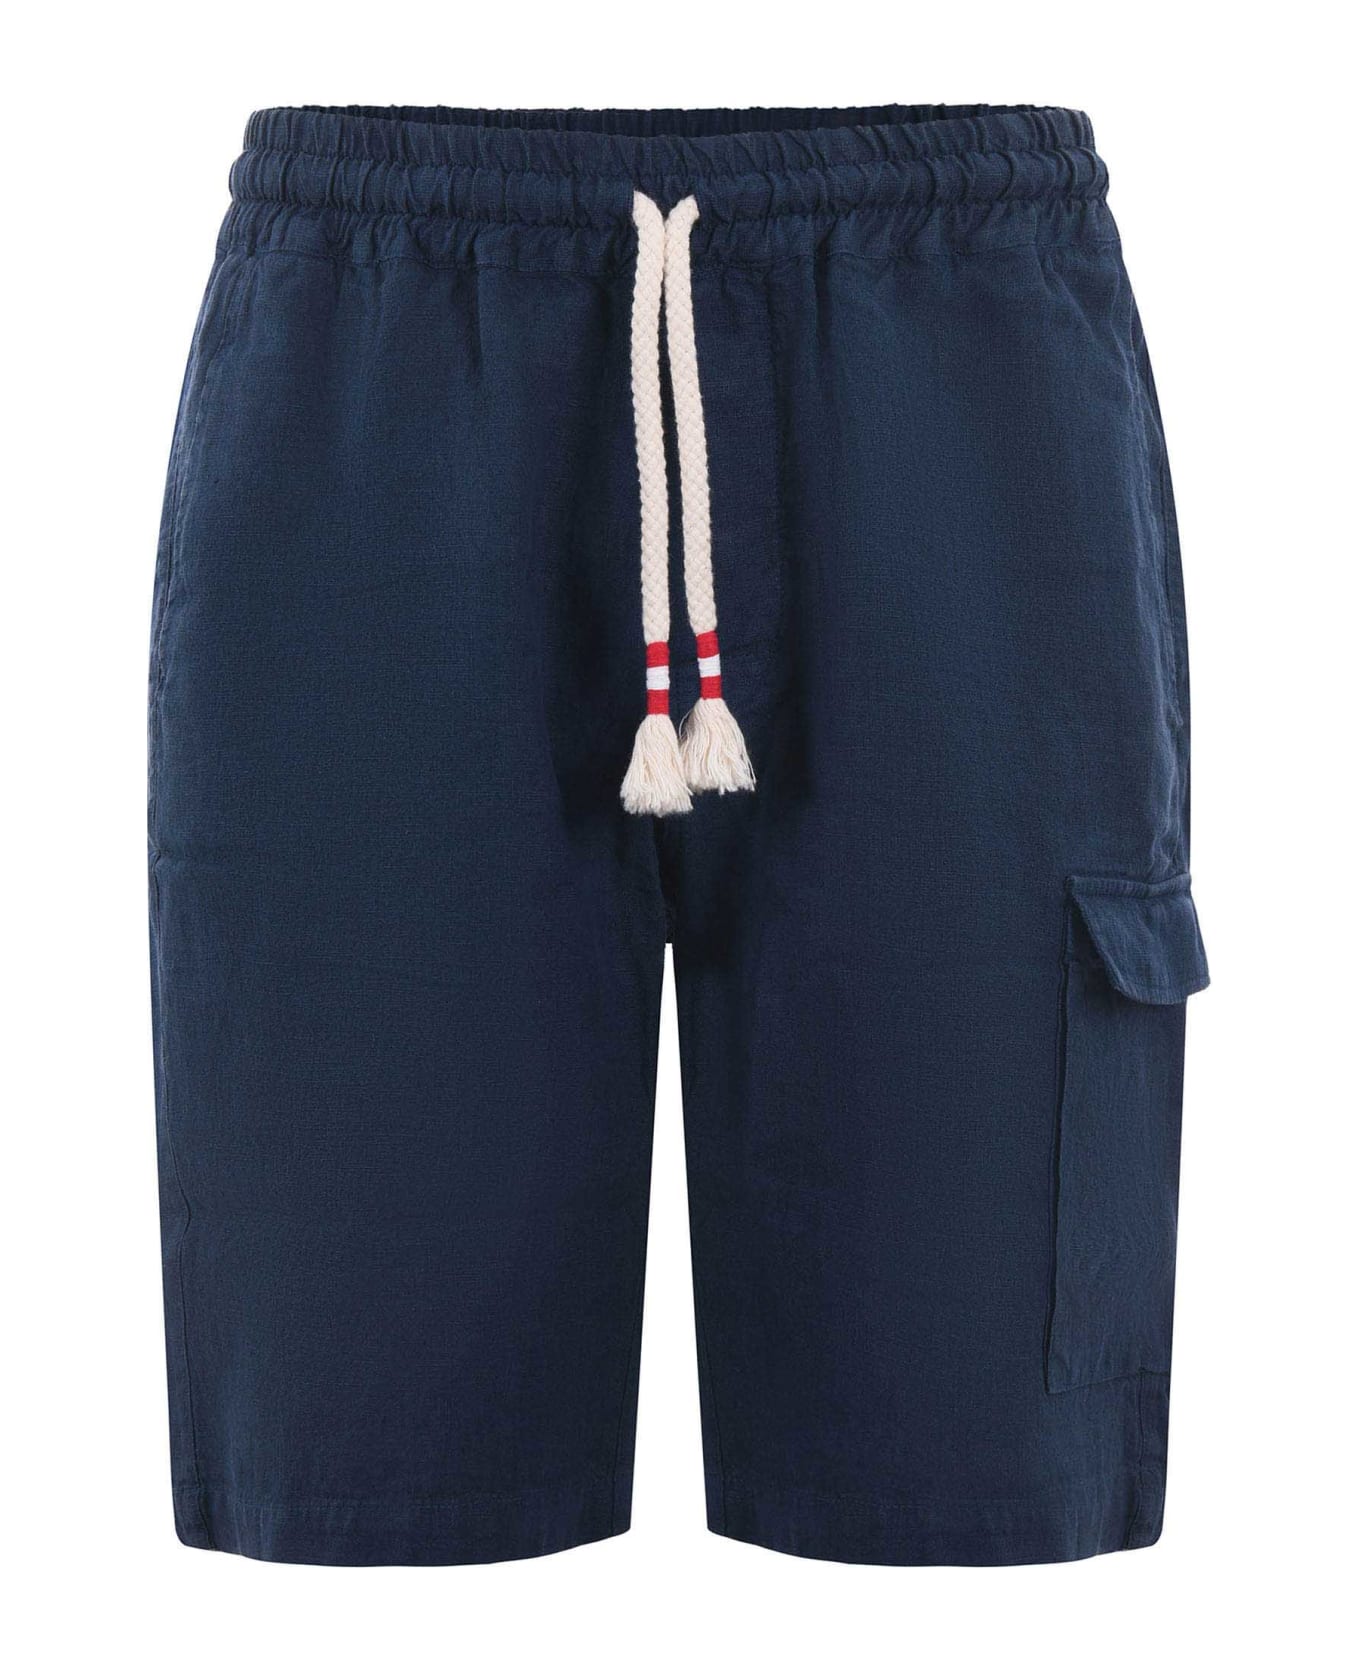 MC2 Saint Barth Linen Shorts - Blu scuro ショートパンツ